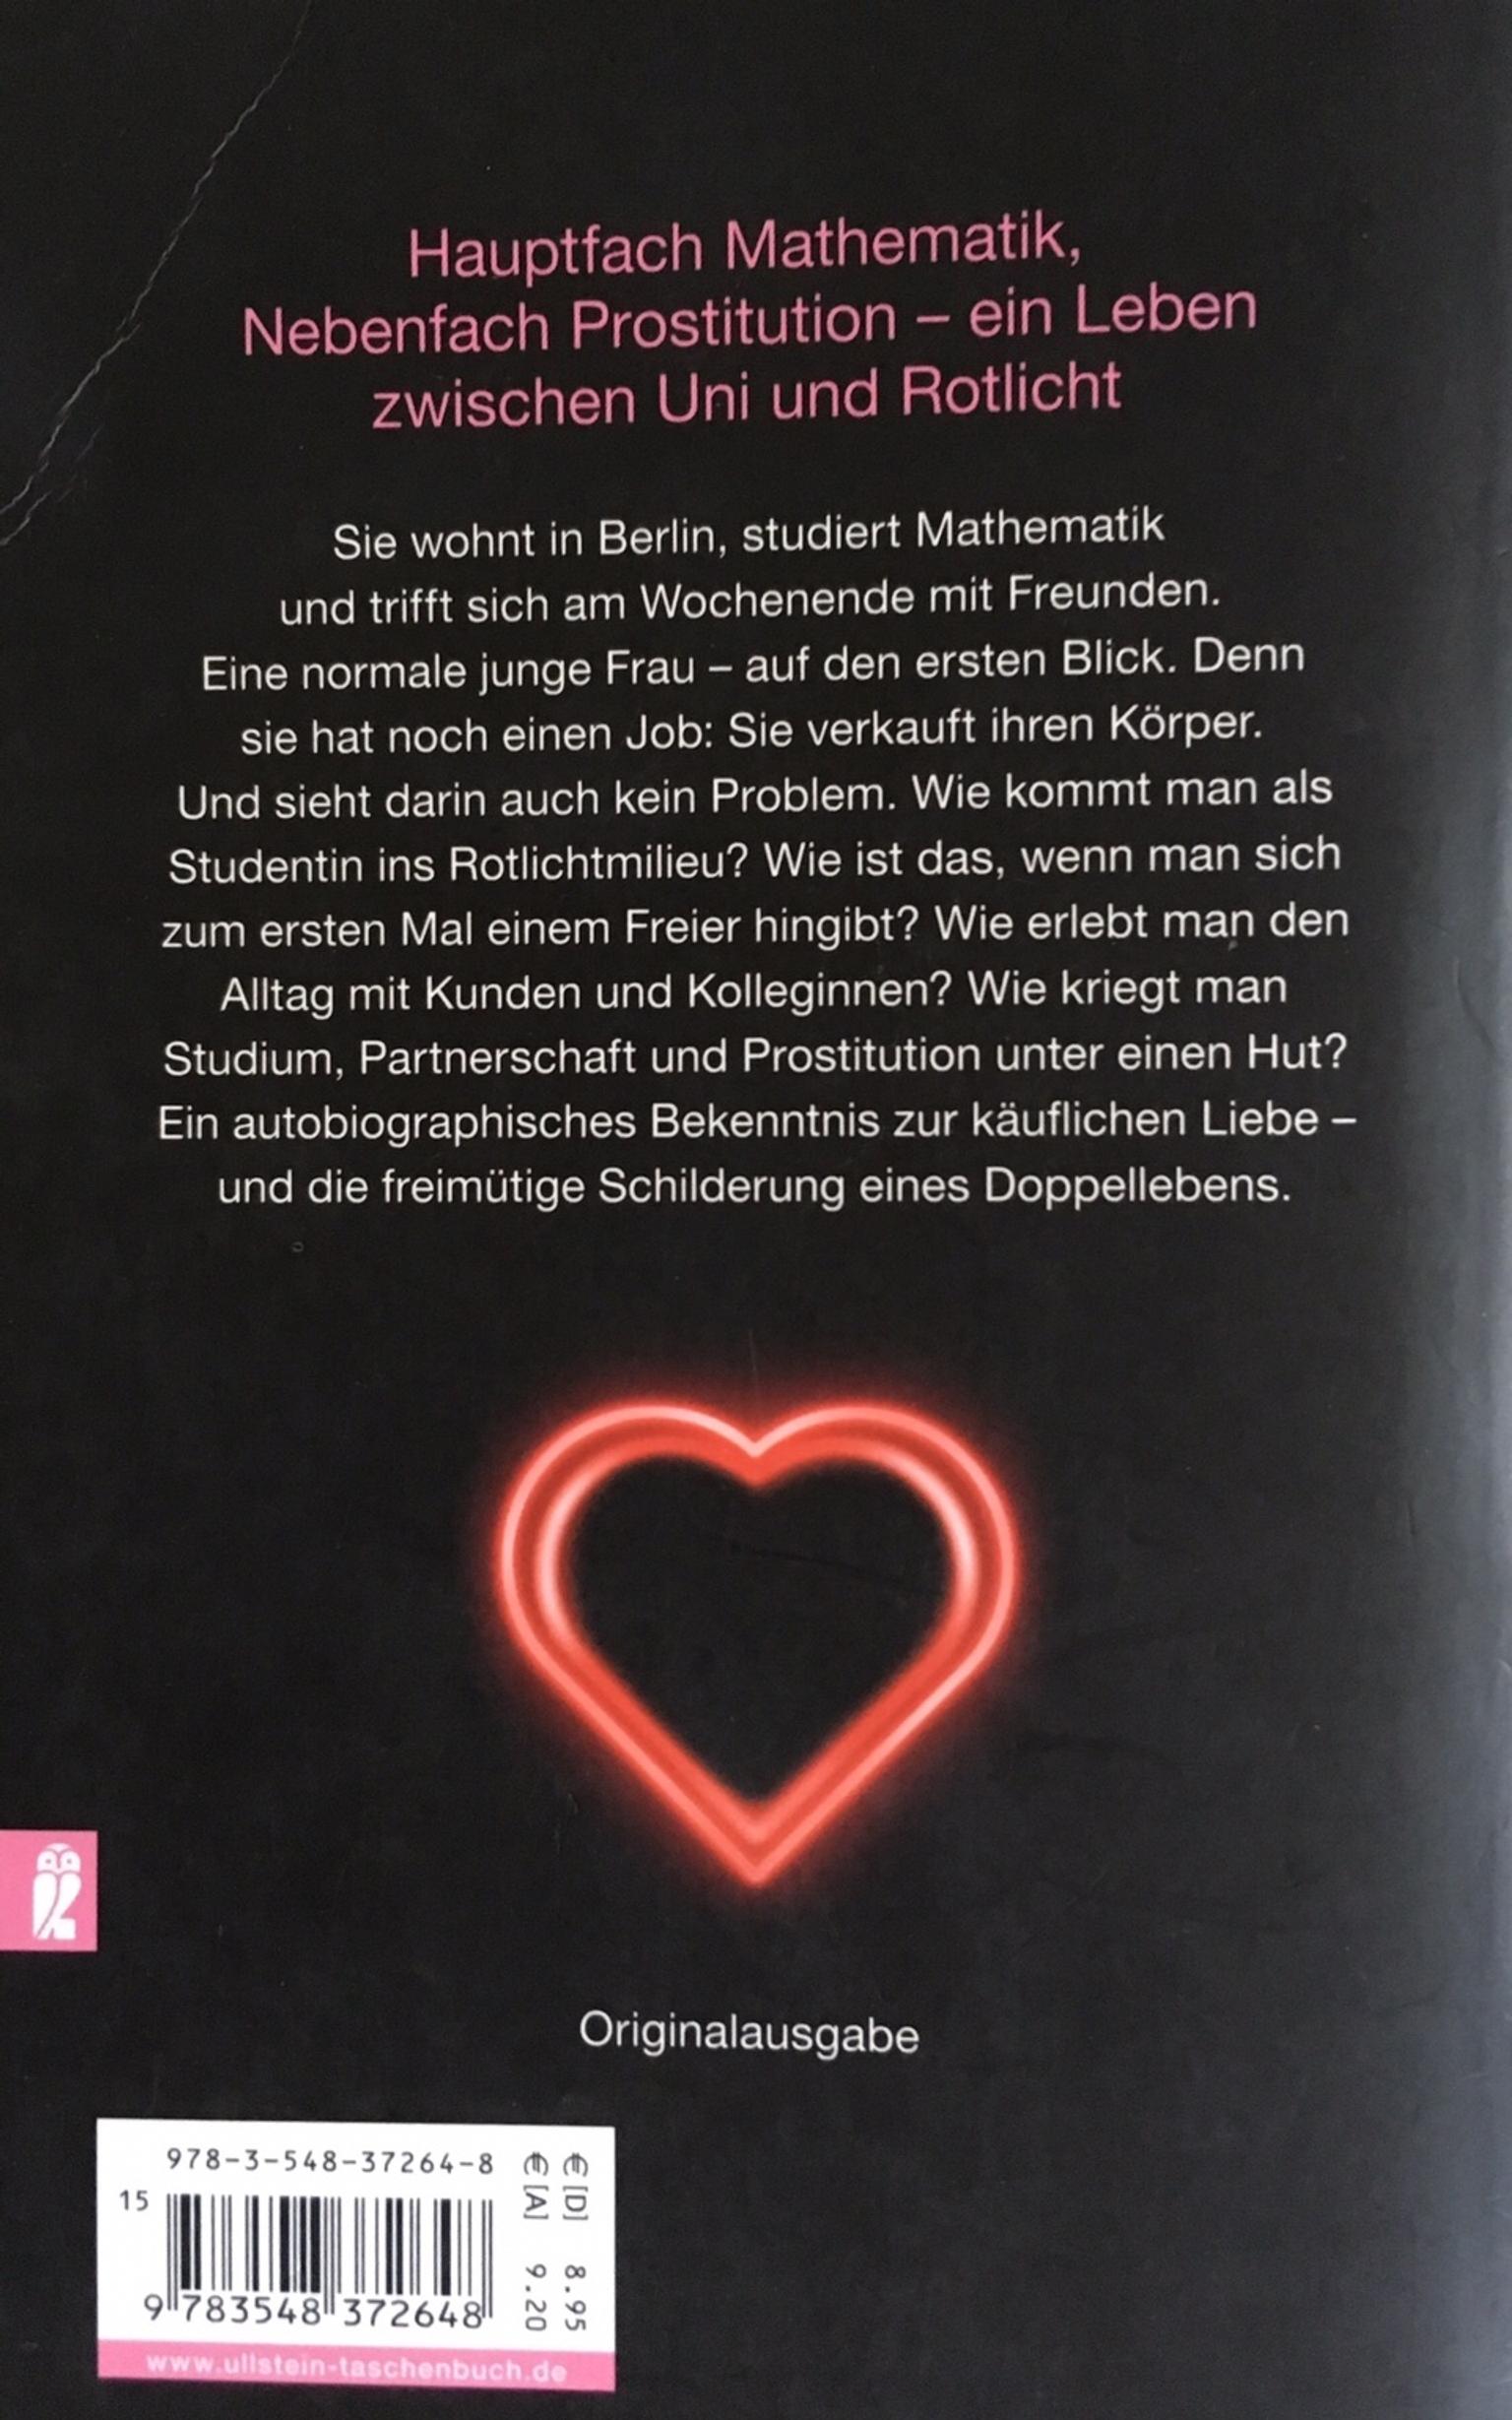 Dating berlin knjiga